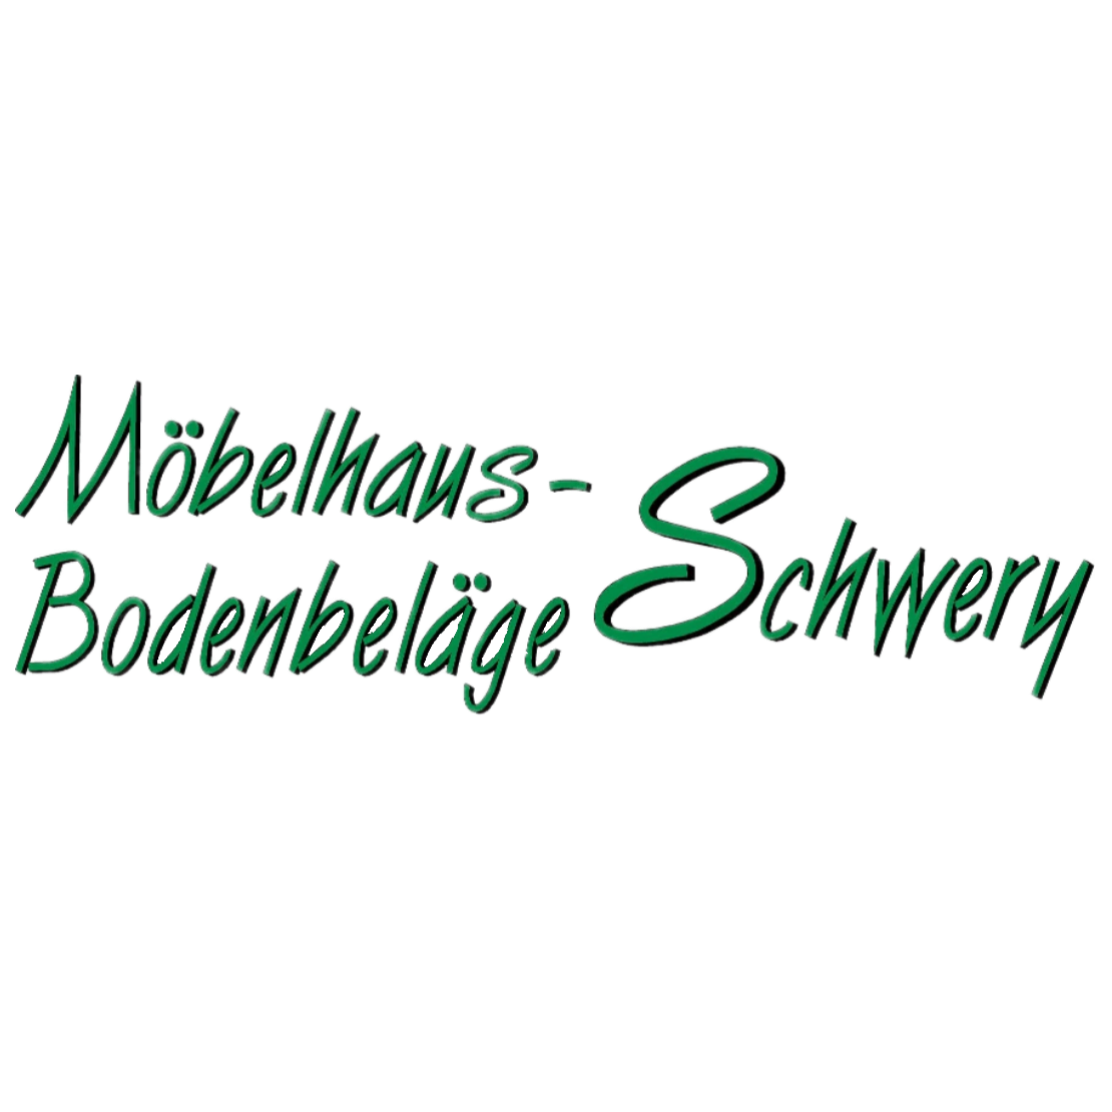 Möbelhaus - Bodenbeläge Schwery Logo